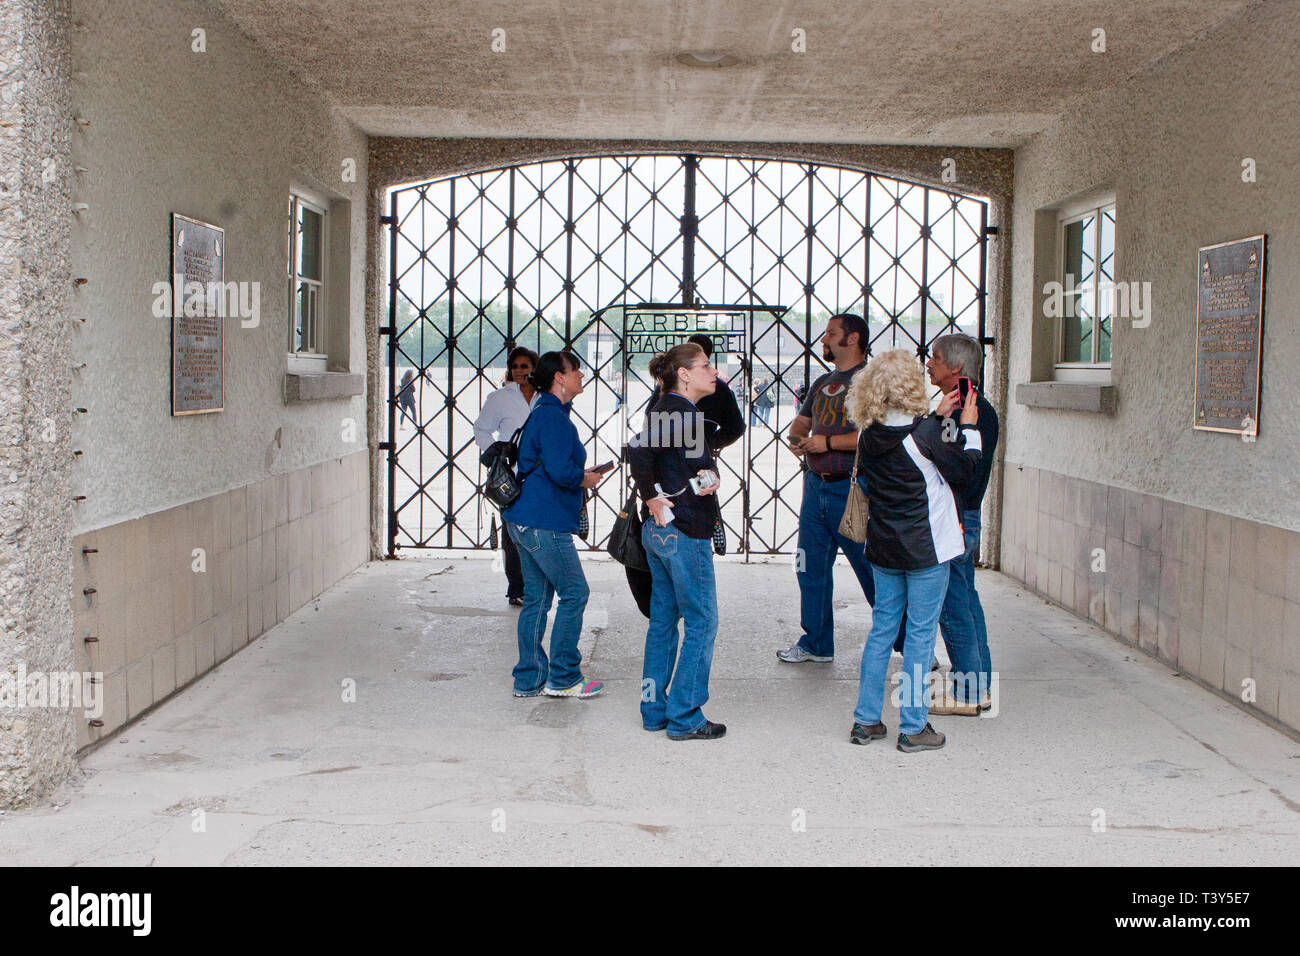 Arbeit Macht Frei gate at Dachau Stock Photo